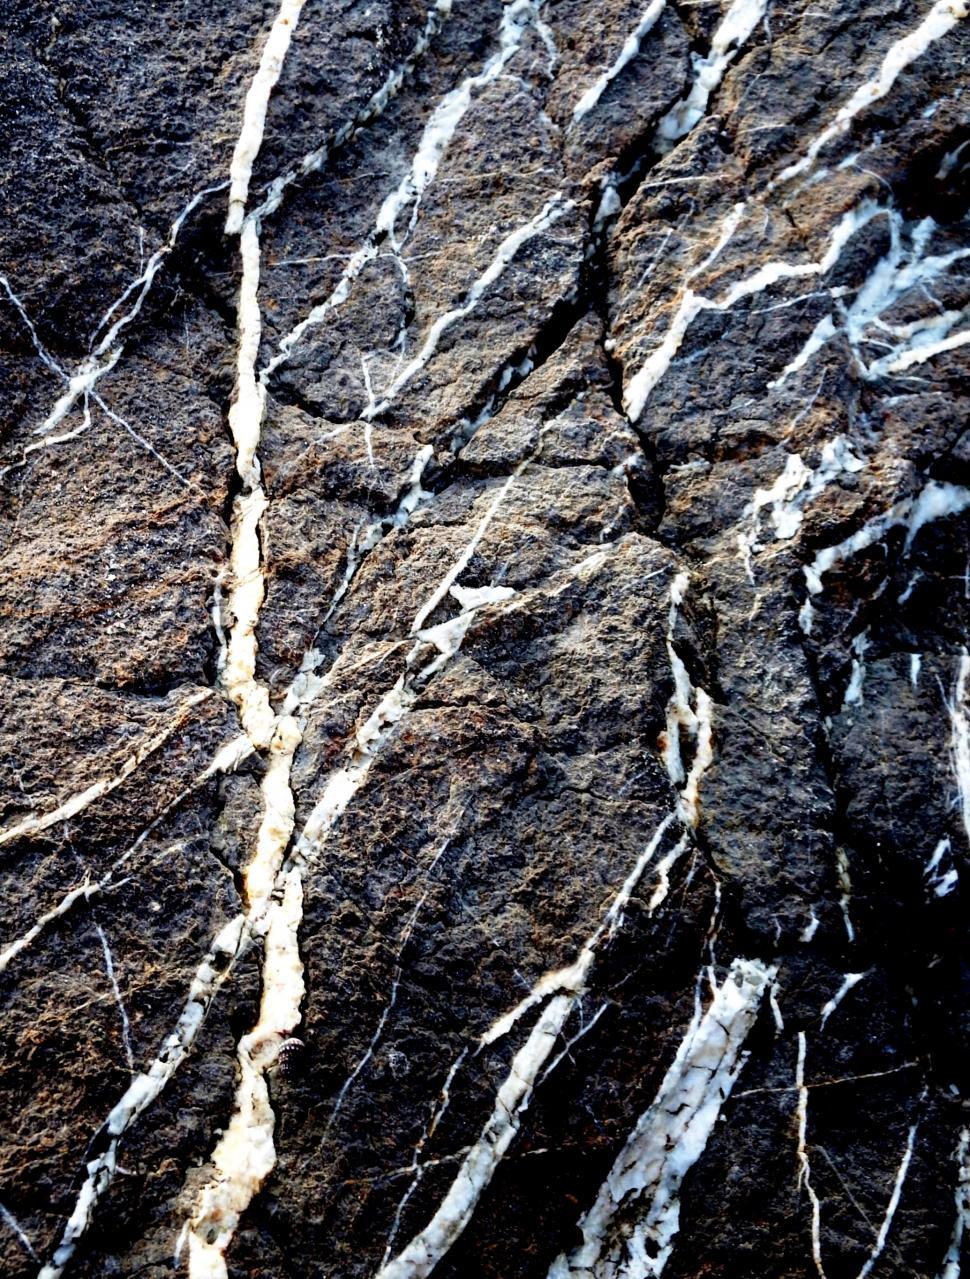 Free Image of Dark black rock texture with white veins running through the boulder  